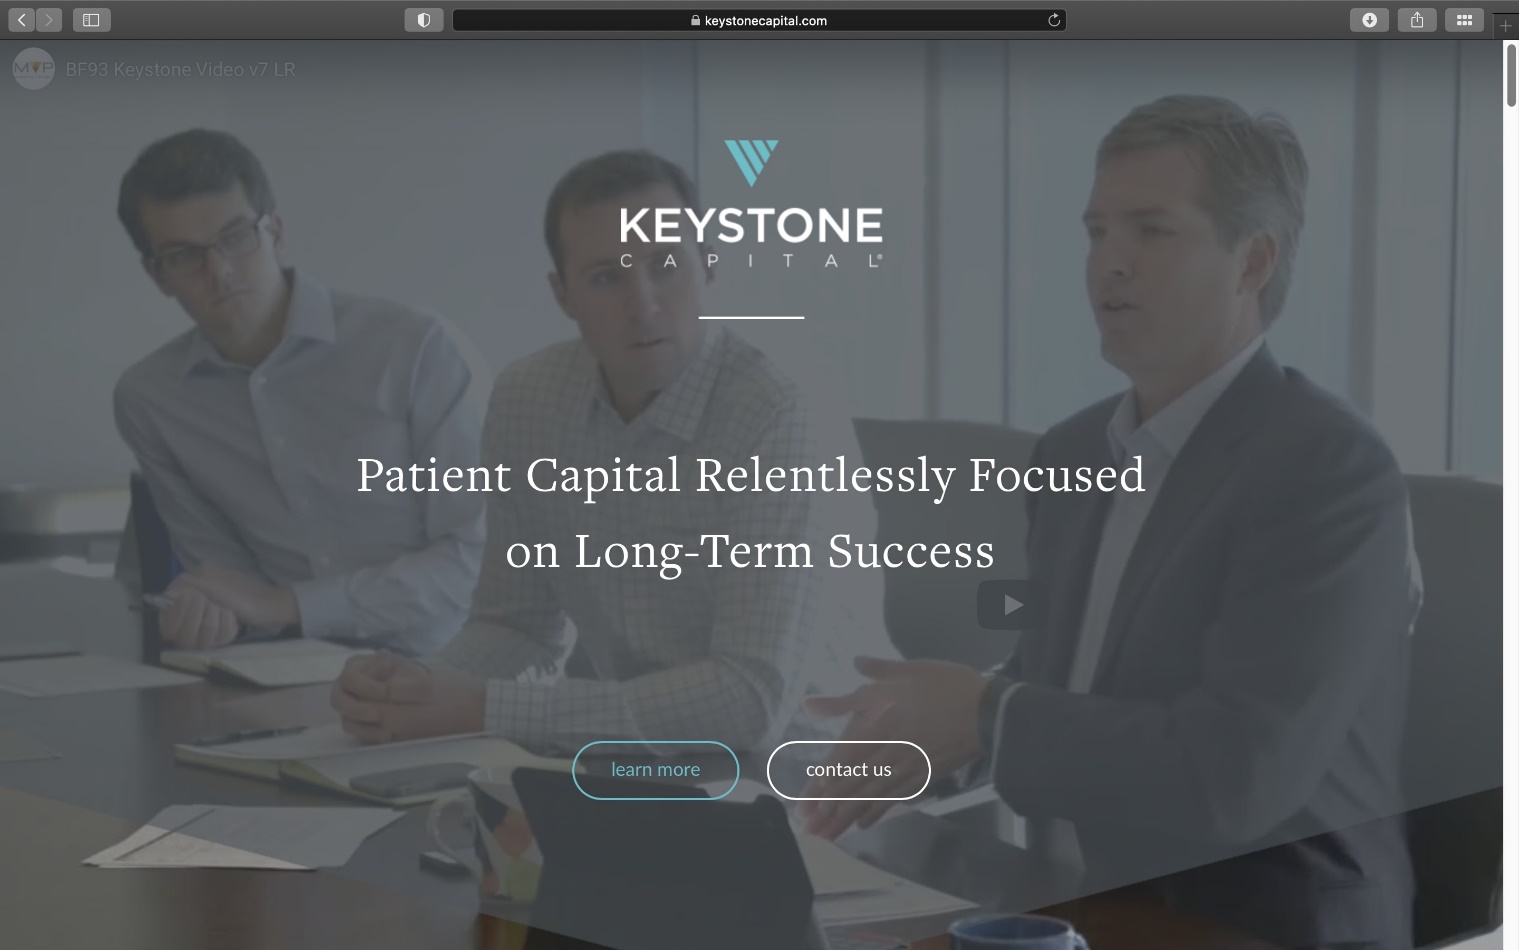 Keystone Capital website homepage